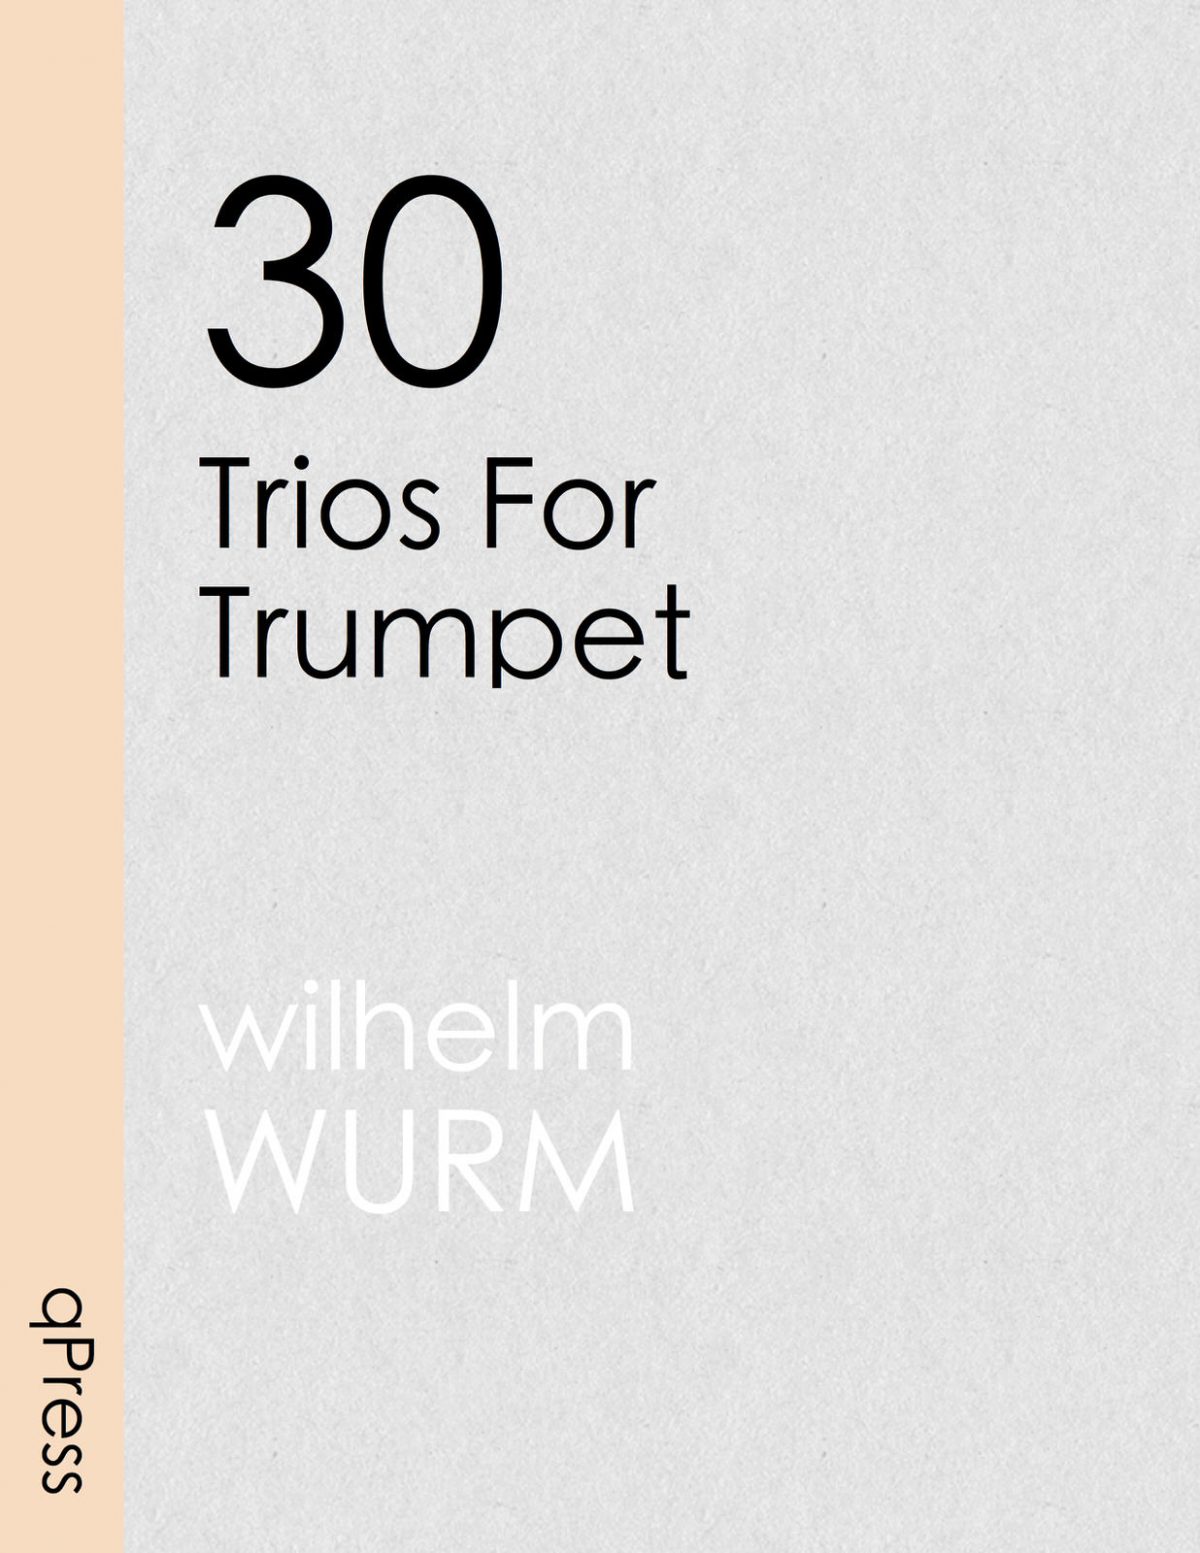 wurm-30-trios-for-trumpet